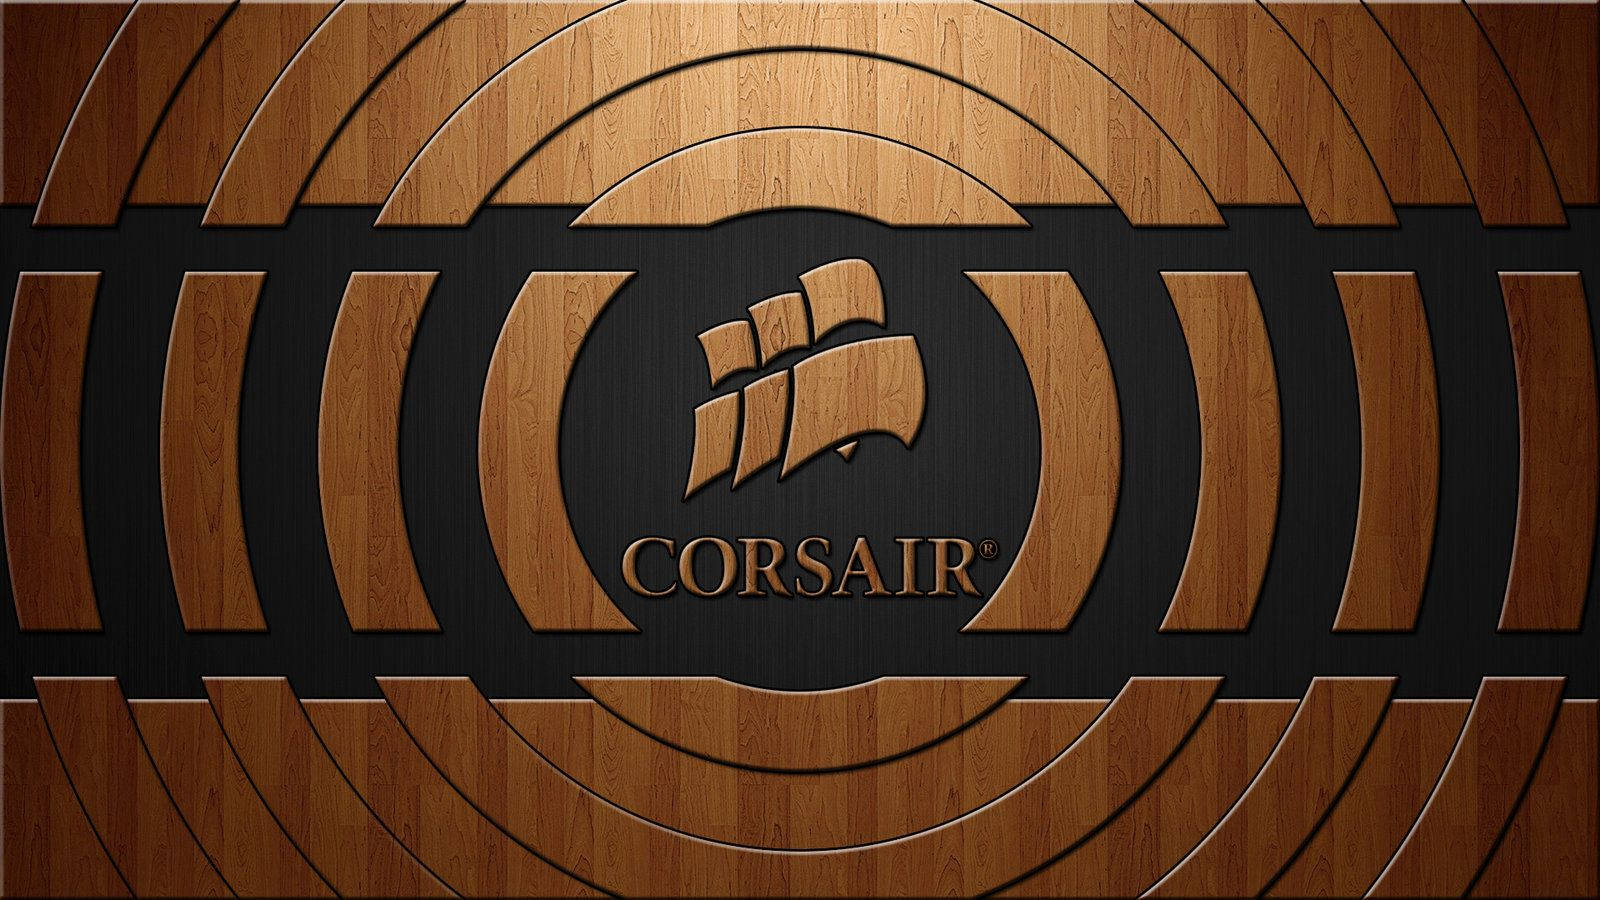 Free Corsair Wallpaper Downloads, [100+] Corsair Wallpapers for FREE |  